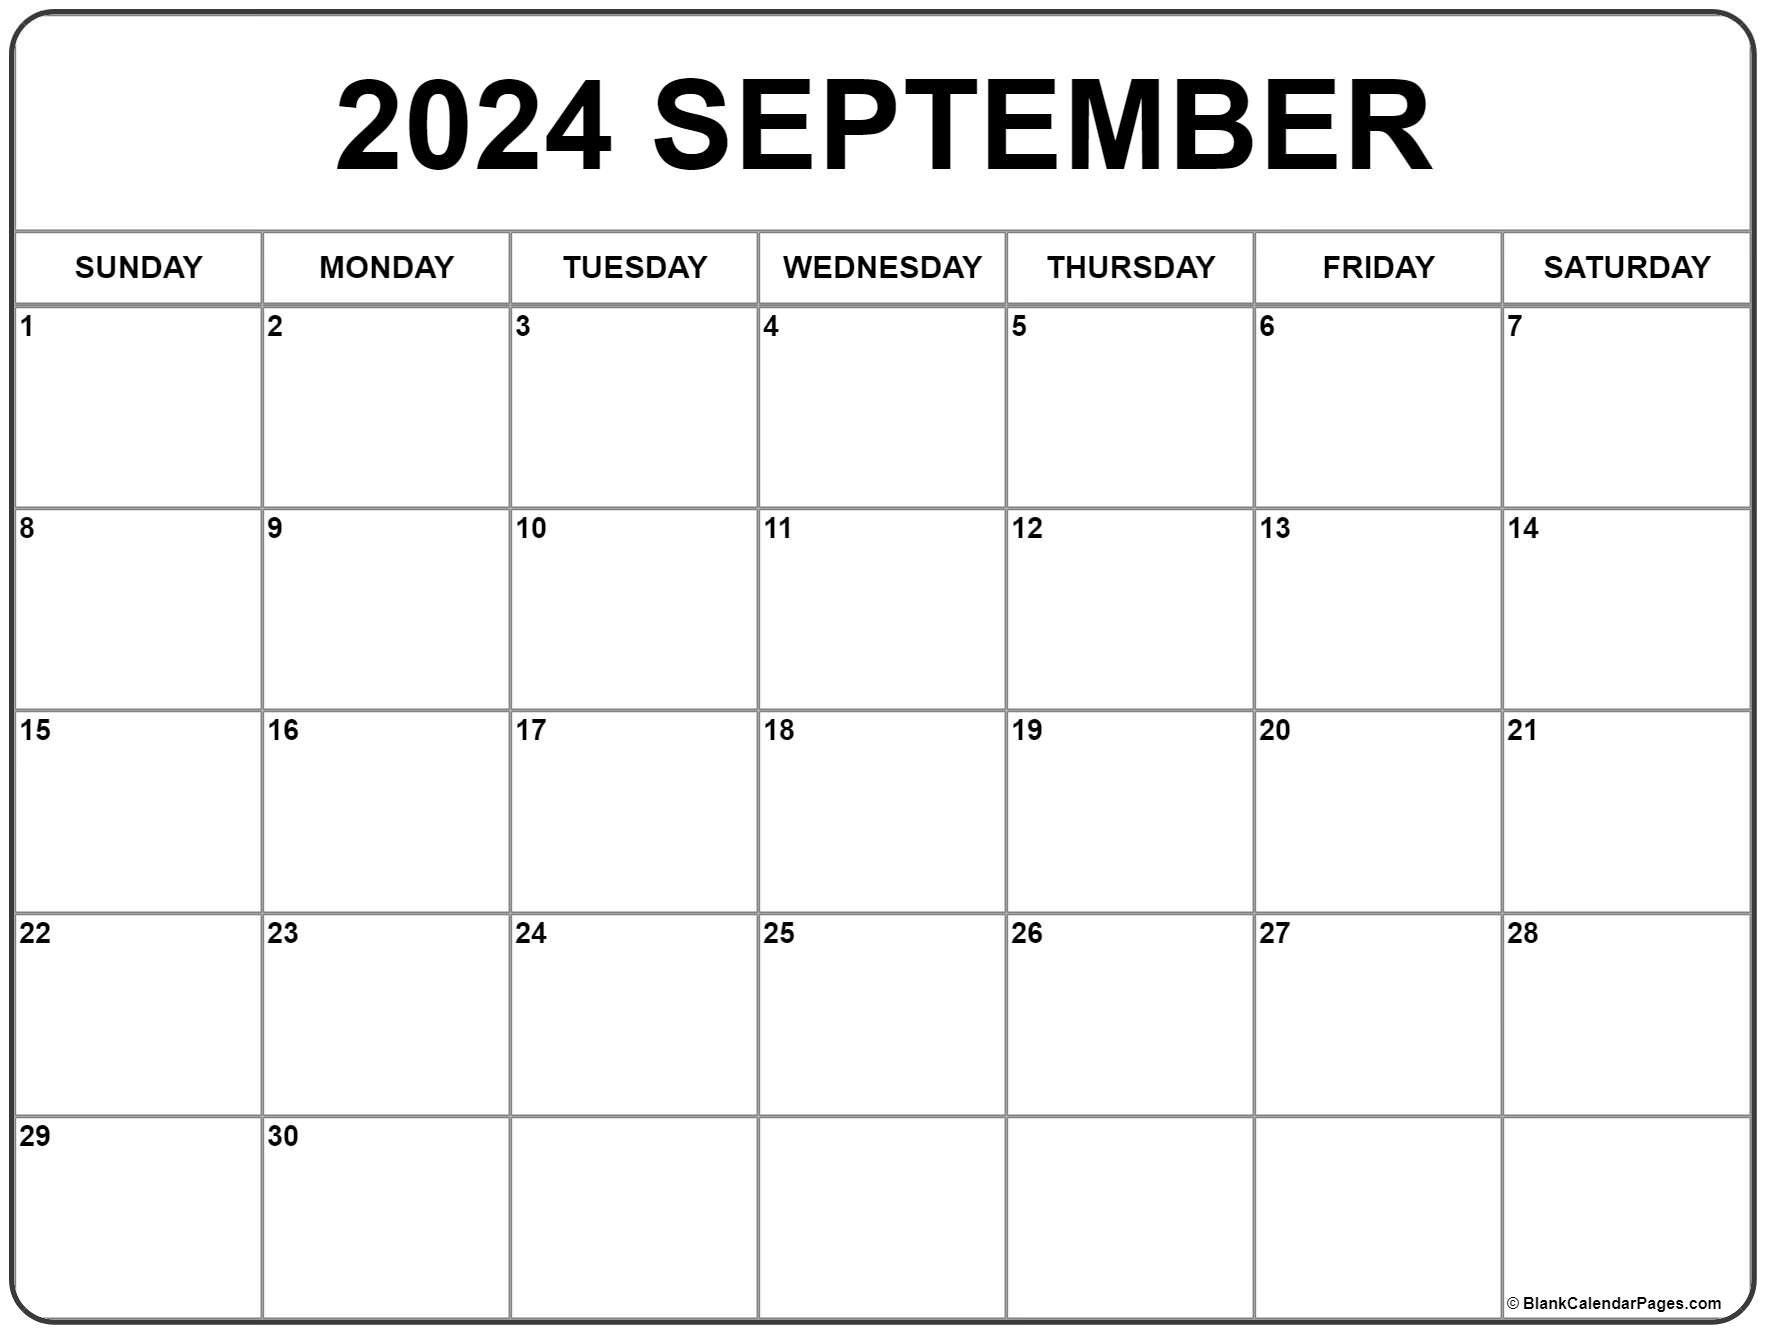 Calendar Of September 2021 September 2021 calendar | free printable monthly calendars